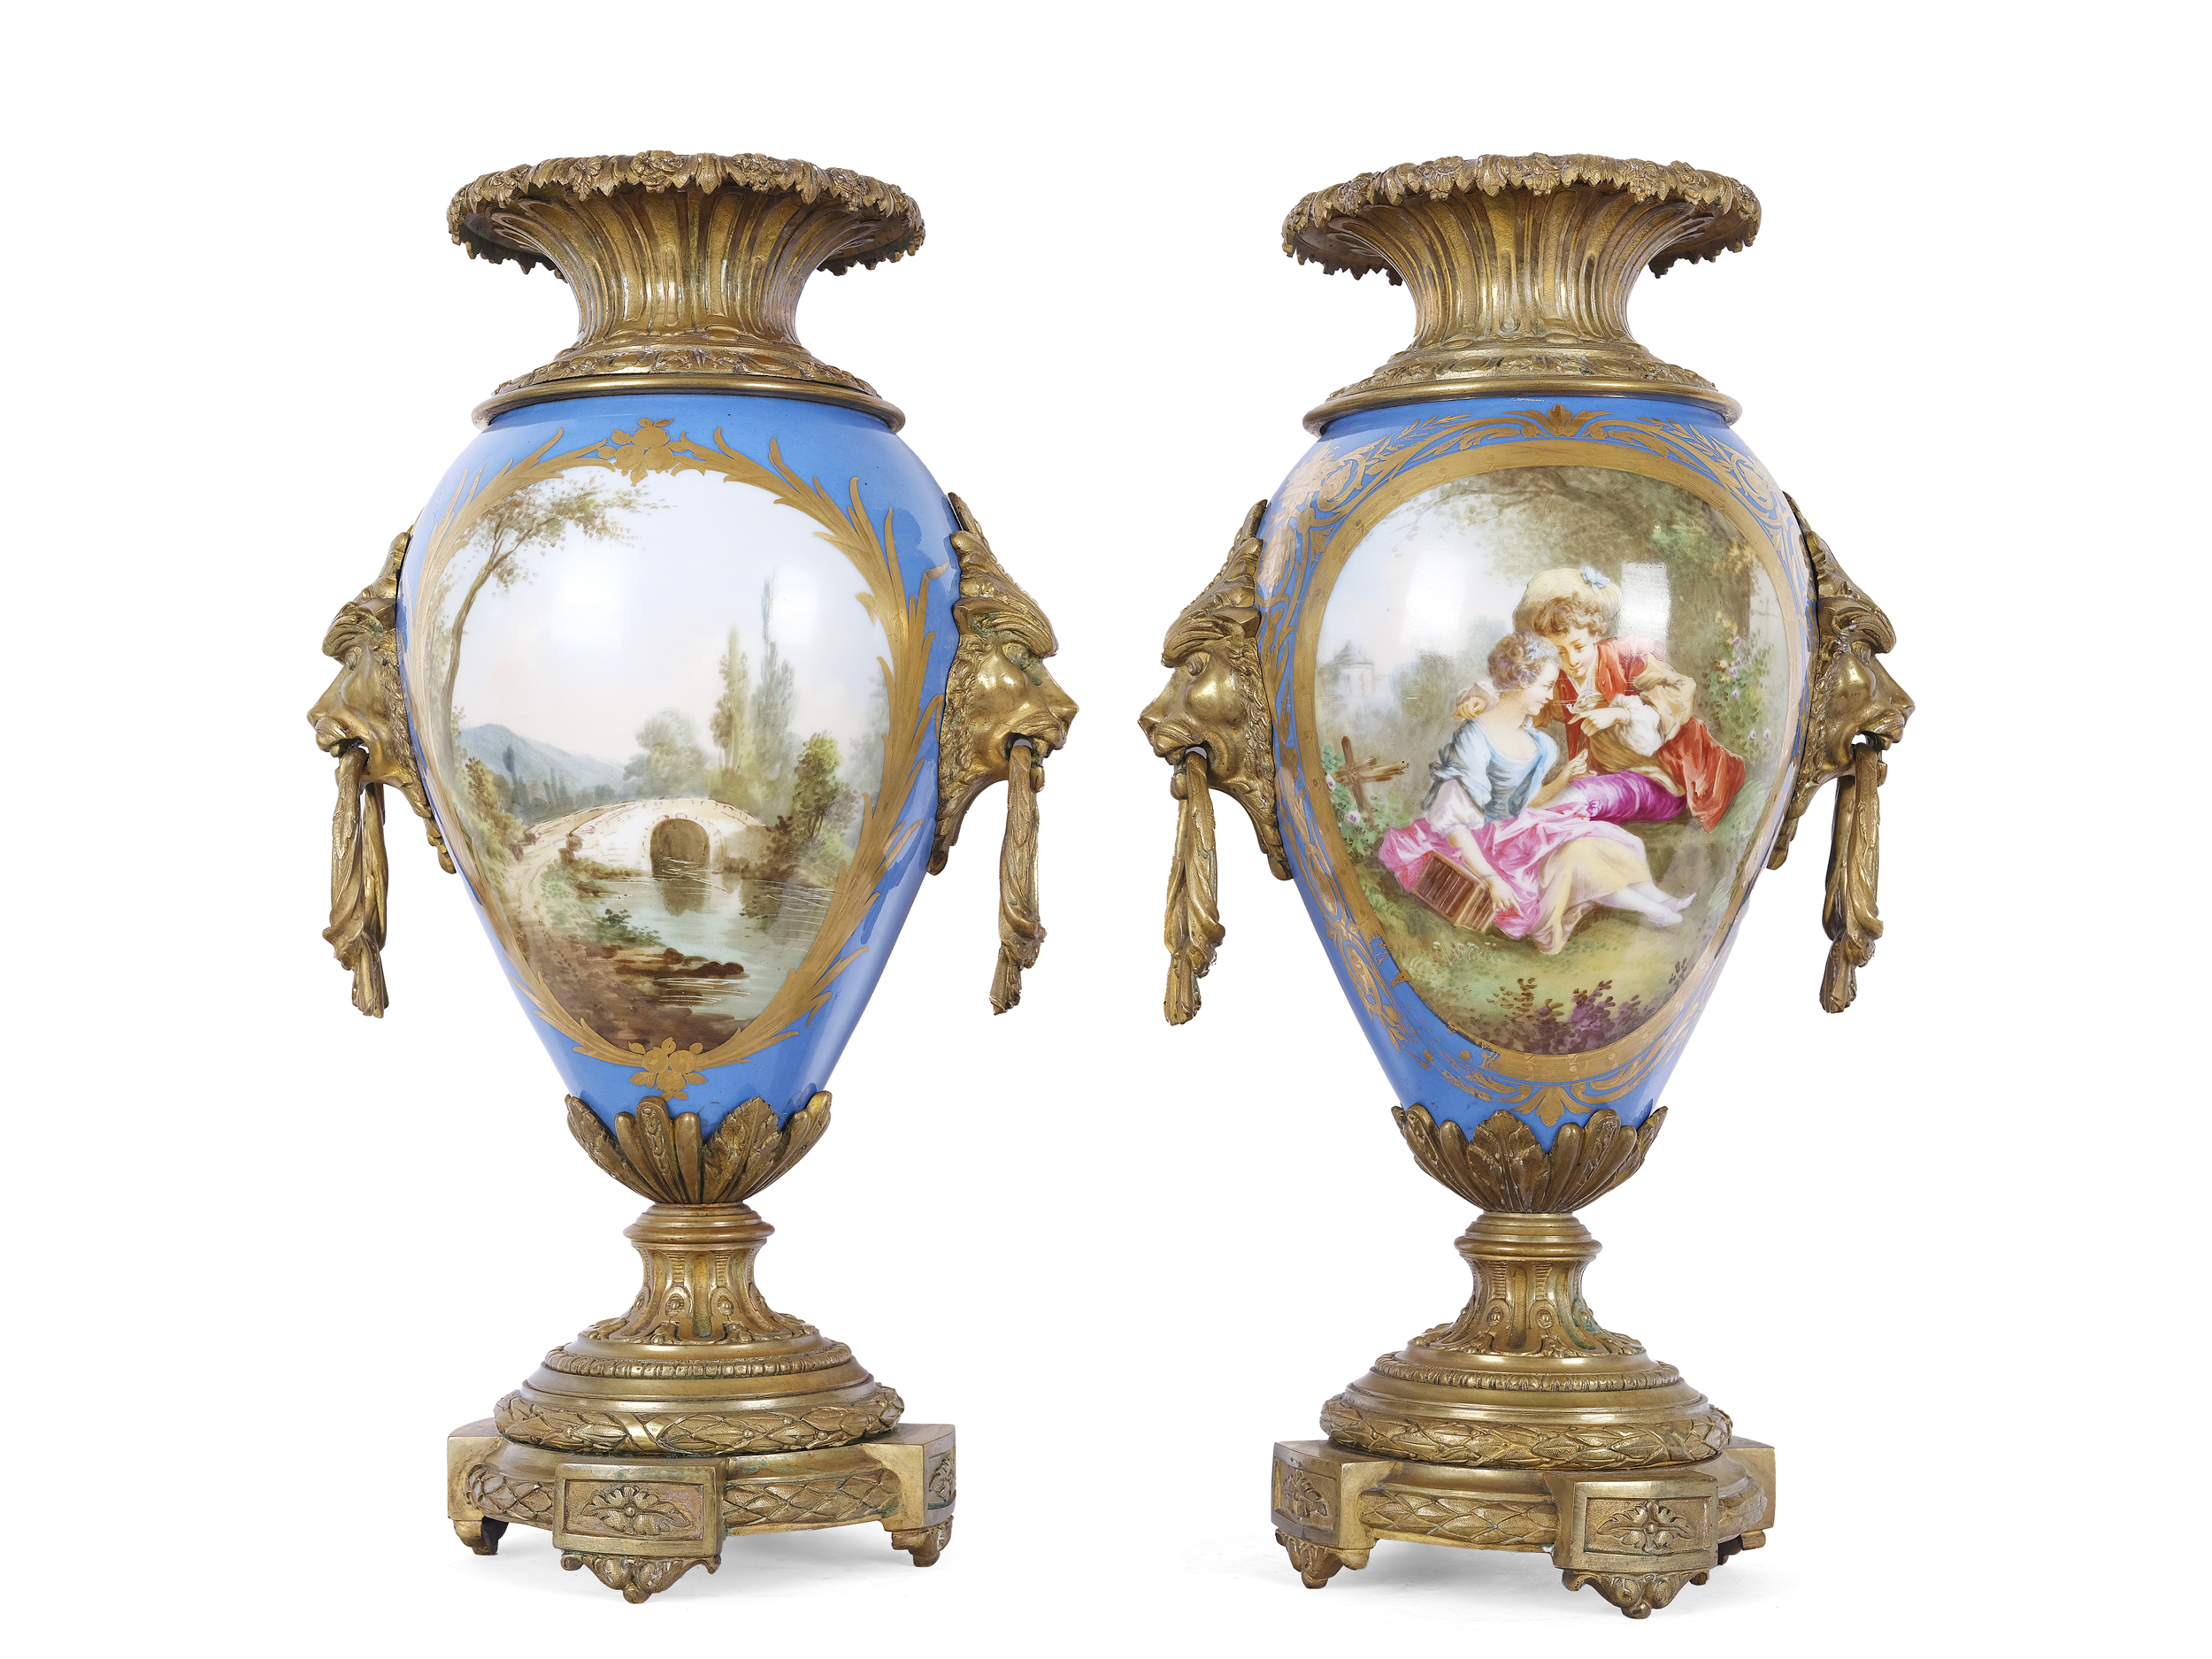 Pair of vases with Watteau scene, Sèvres, Paris, mid 19th century